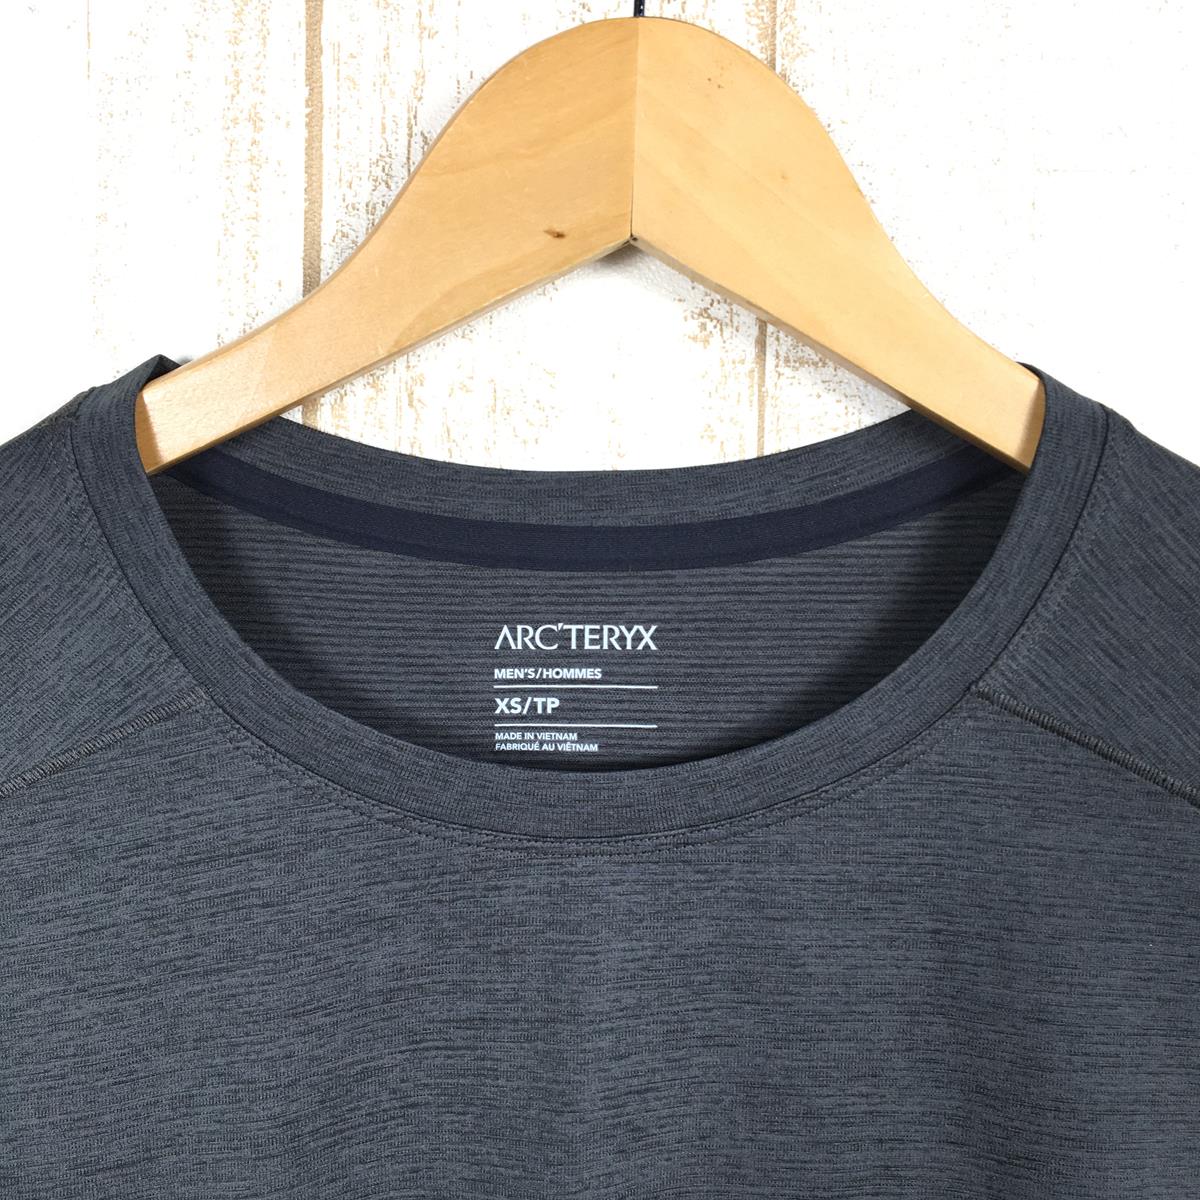 【MEN's XS】 アークテリクス コーマック ロゴ Tシャツ Cormac Logo T-Shirt ARCTERYX X000006348/L08465800 000033 Black Heather チャコール系